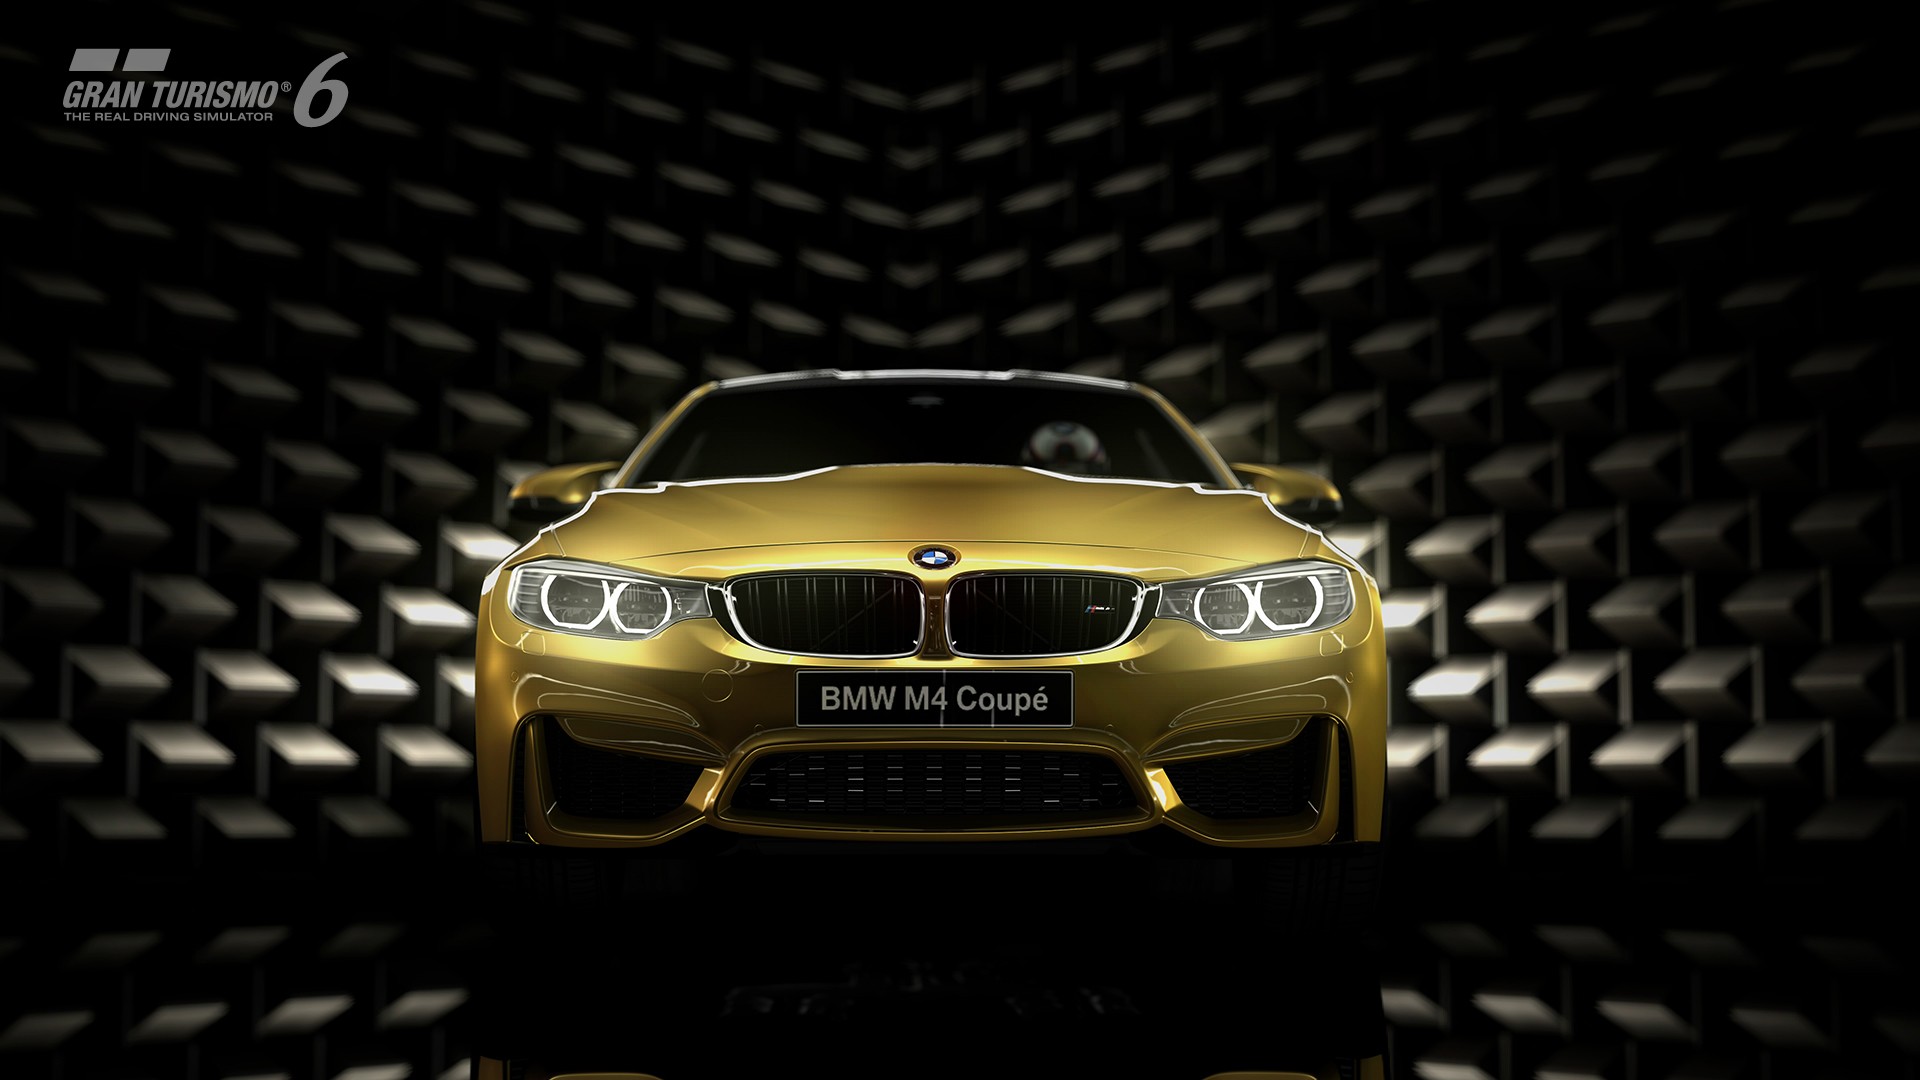 General 1920x1080 car BMW F80/F82/F83 BMW 4 Series BMW yellow cars Gran Turismo 6 video games vehicle